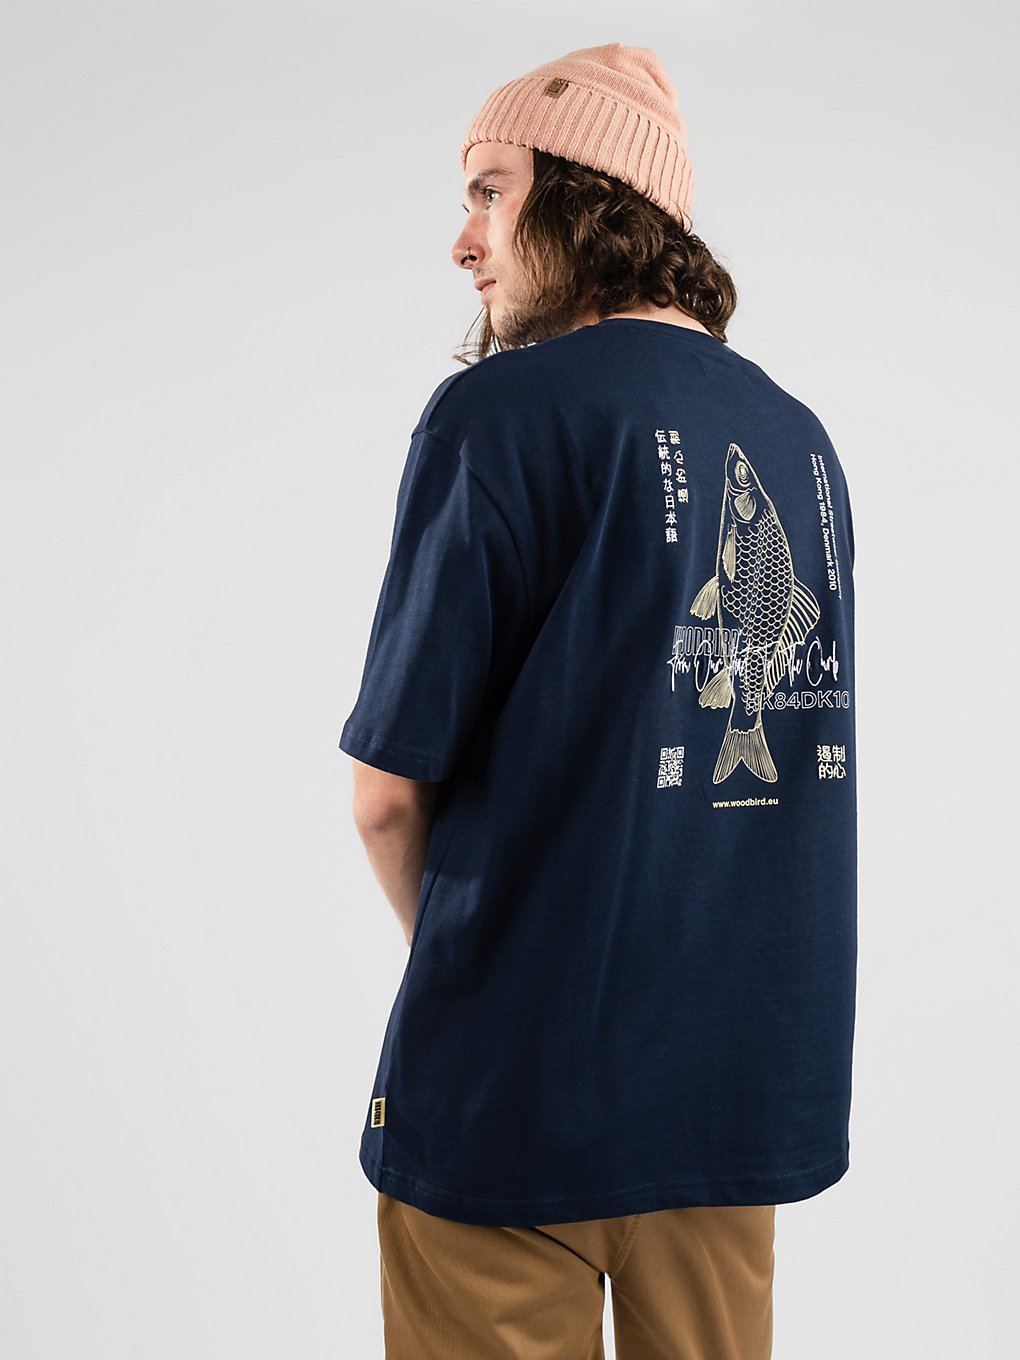 Woodbird Baine Fish T-Shirt navy kaufen